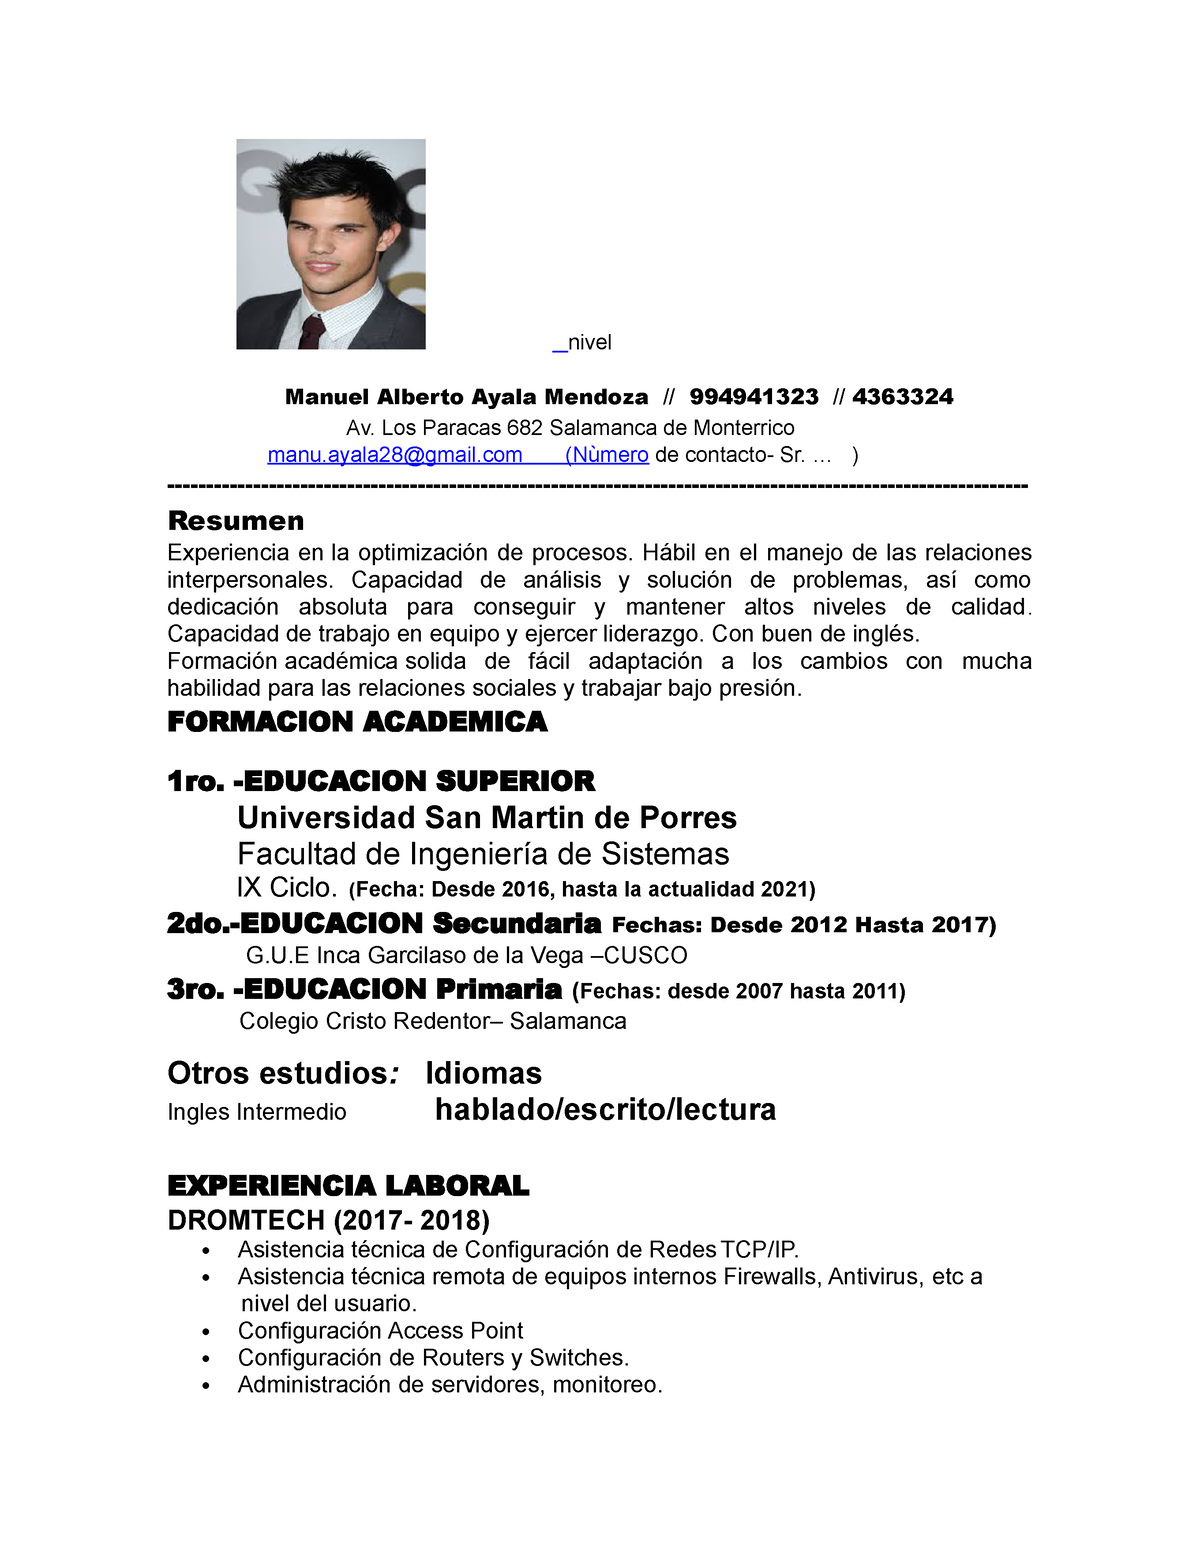 8 Ejemplo De Curriculum Vitae 1 Copia Nivel Manuel Alberto Ayala Mendoza 994941323 0821